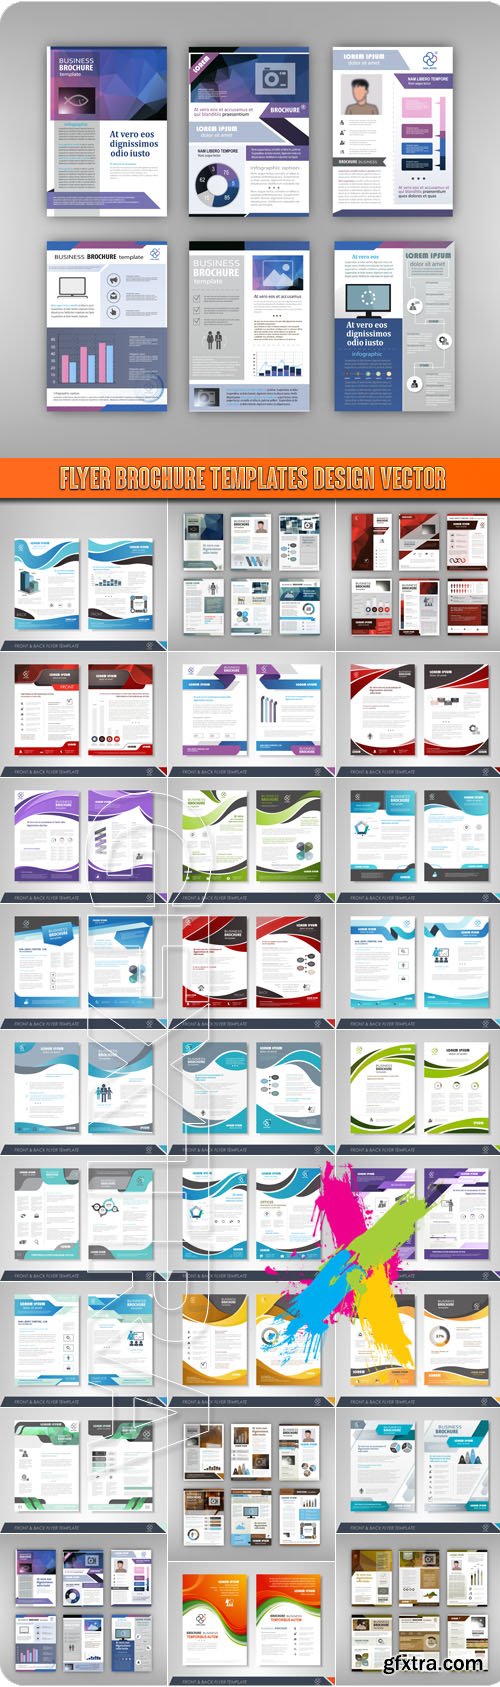 Flyer Brochure Templates Design Vector